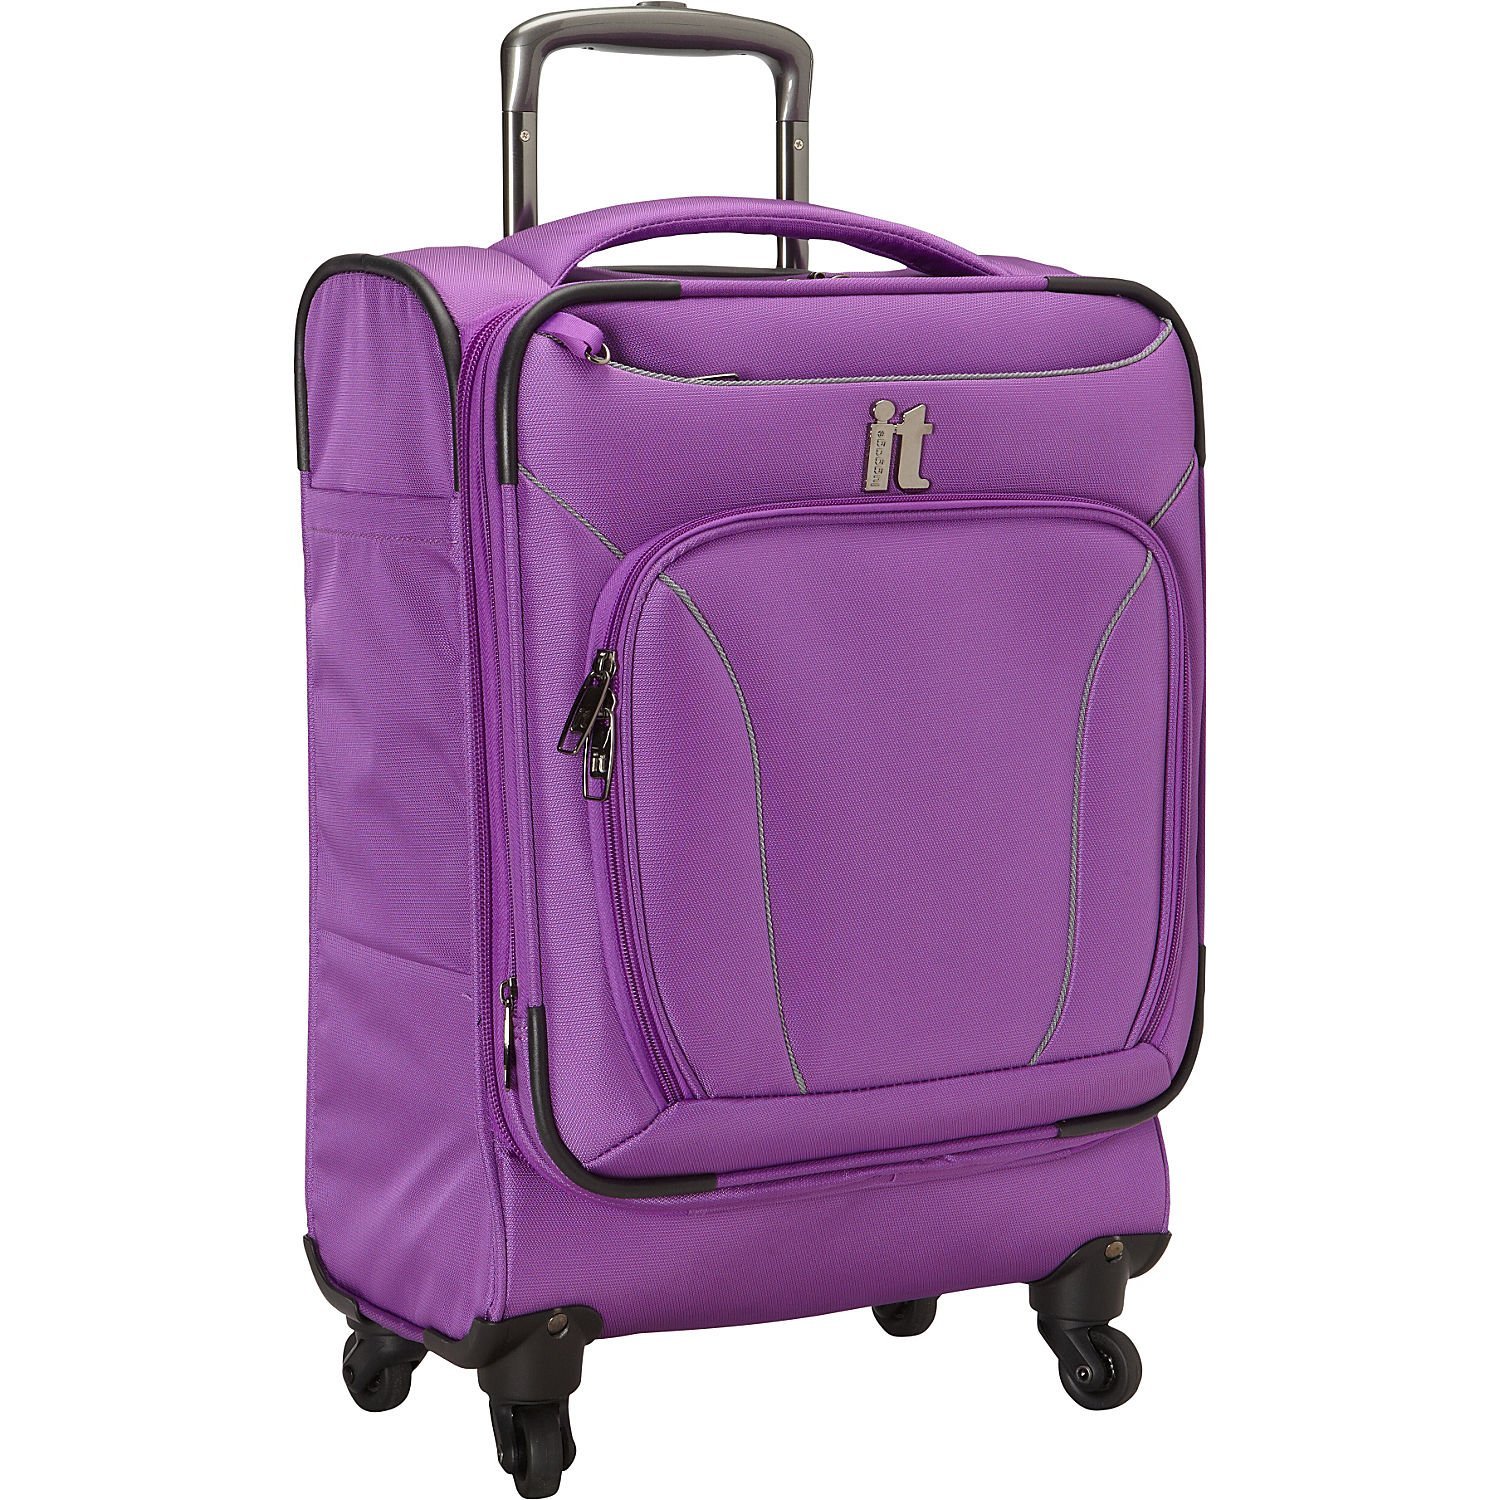 IT Luggage Mega-Lite Premium 22 Inch Carry On | eBay